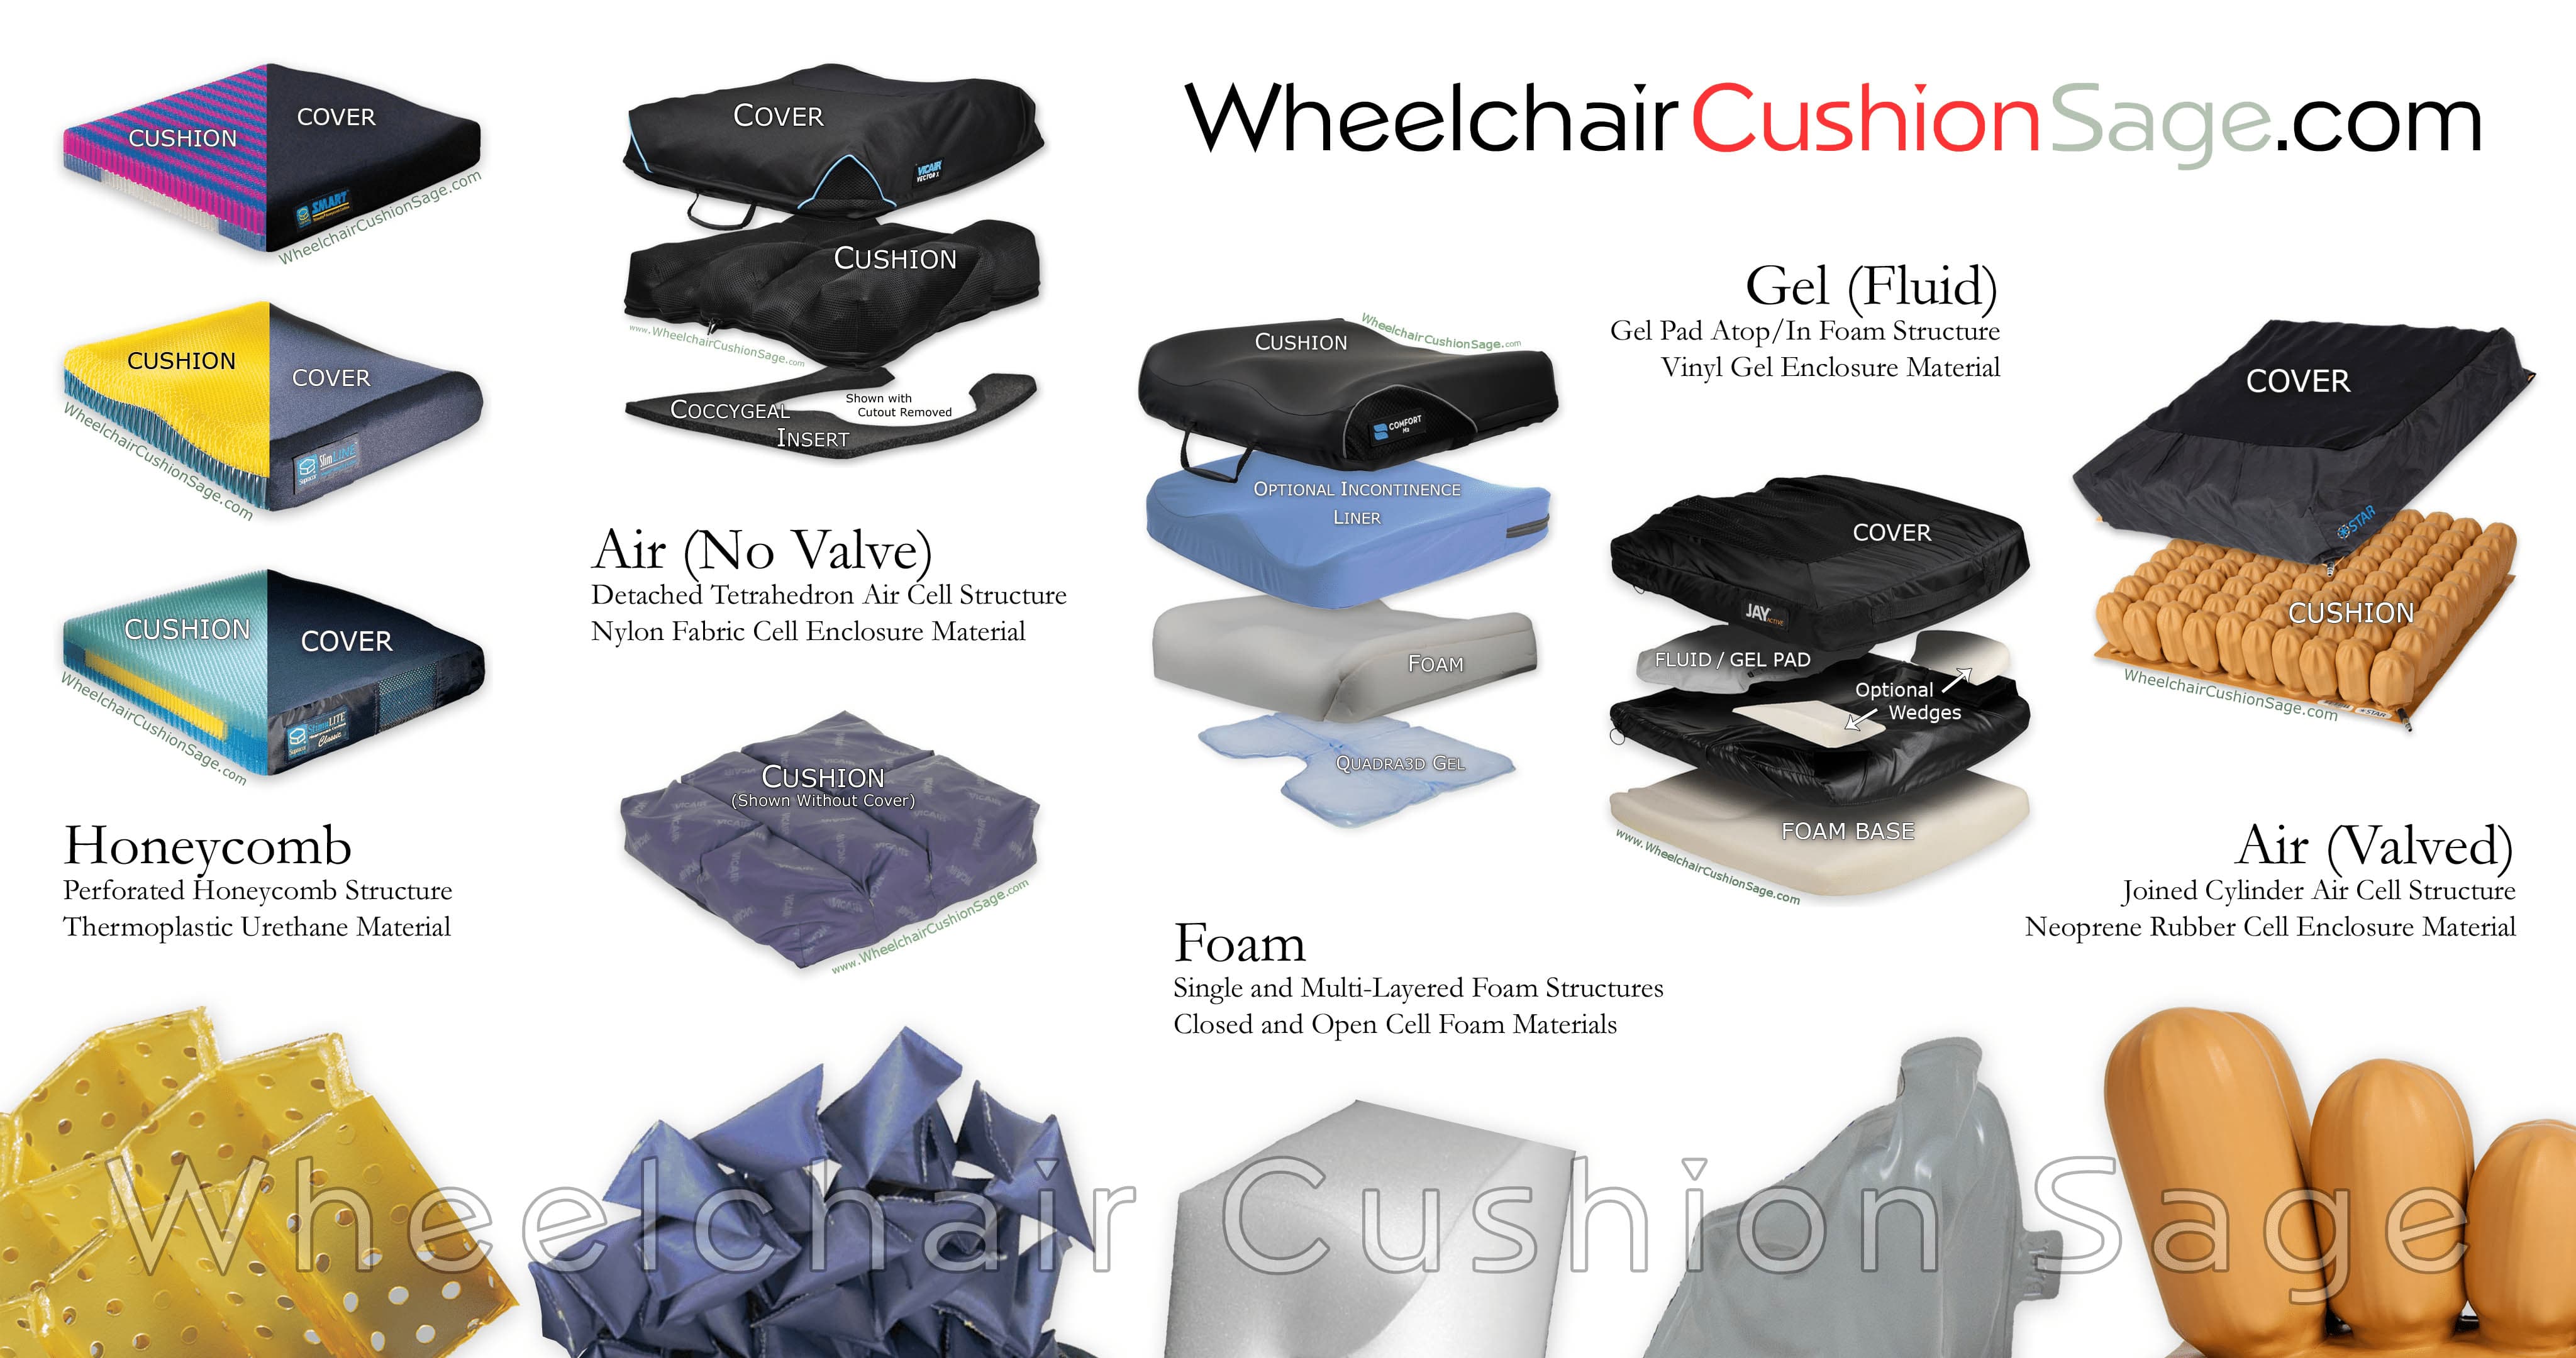 https://wheelchaircushionsage.com/Resources/Wheelchair-Cushion-Structures.jpg